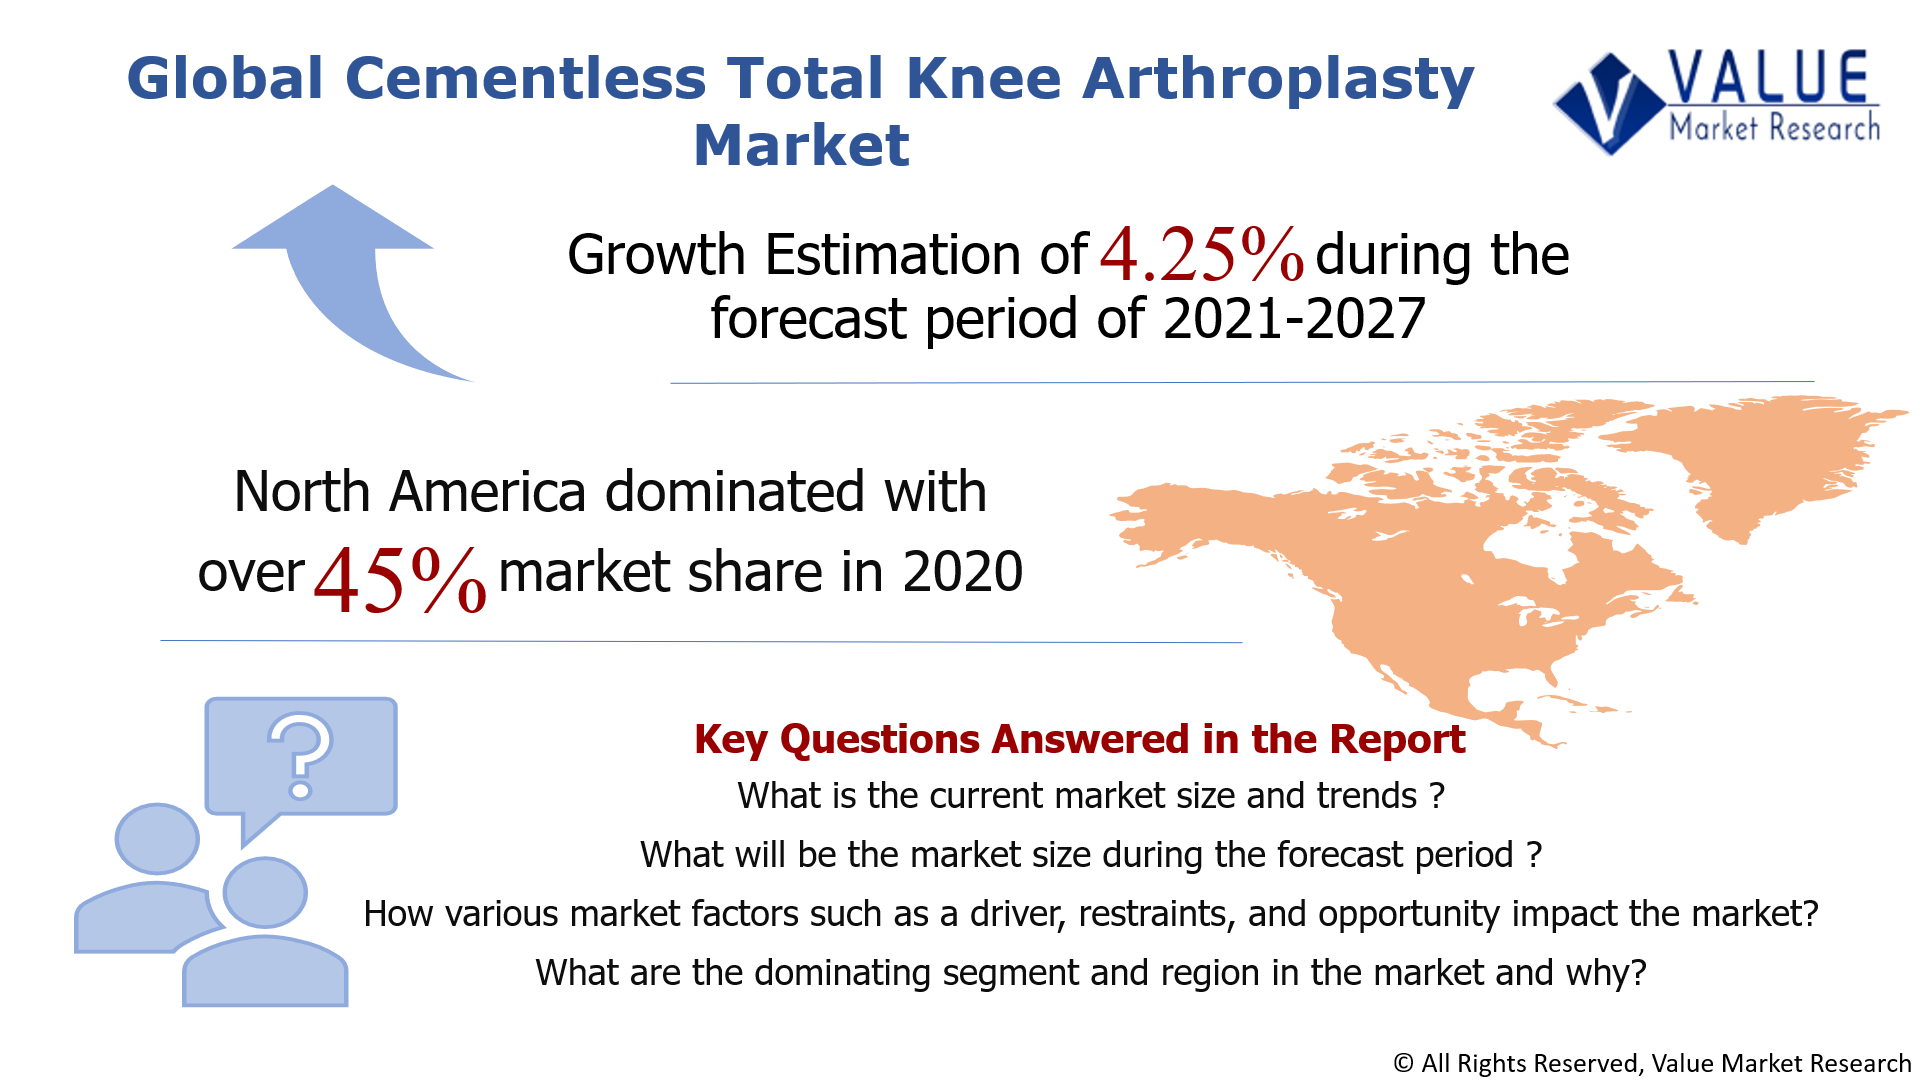 Global Cementless Total Knee Arthroplasty Market Share